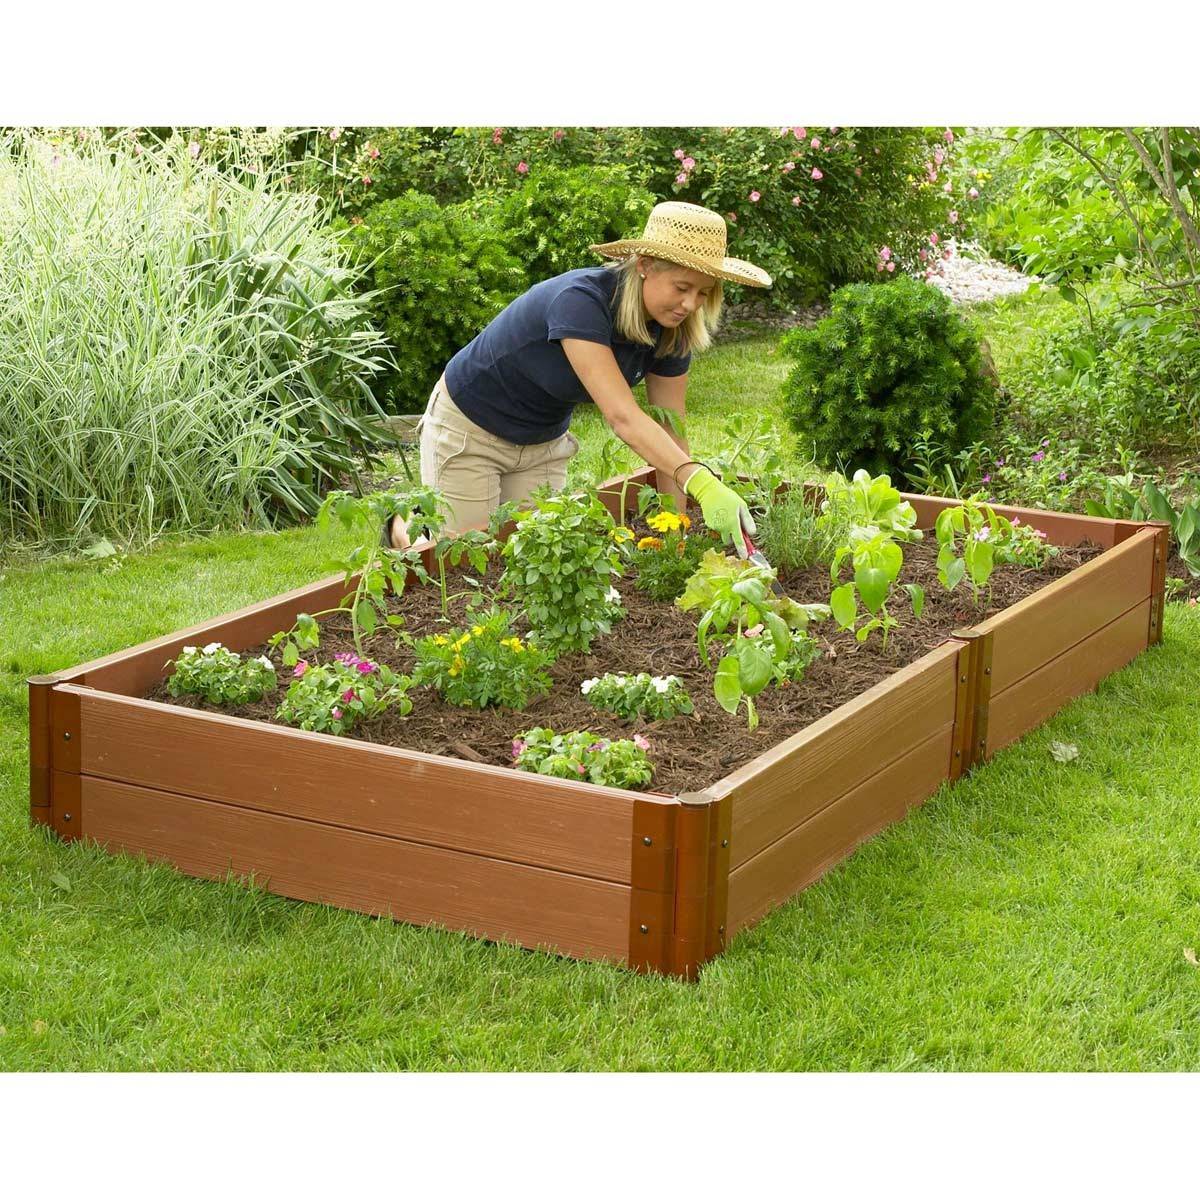 Backyard Raised Bed Garden Ideas